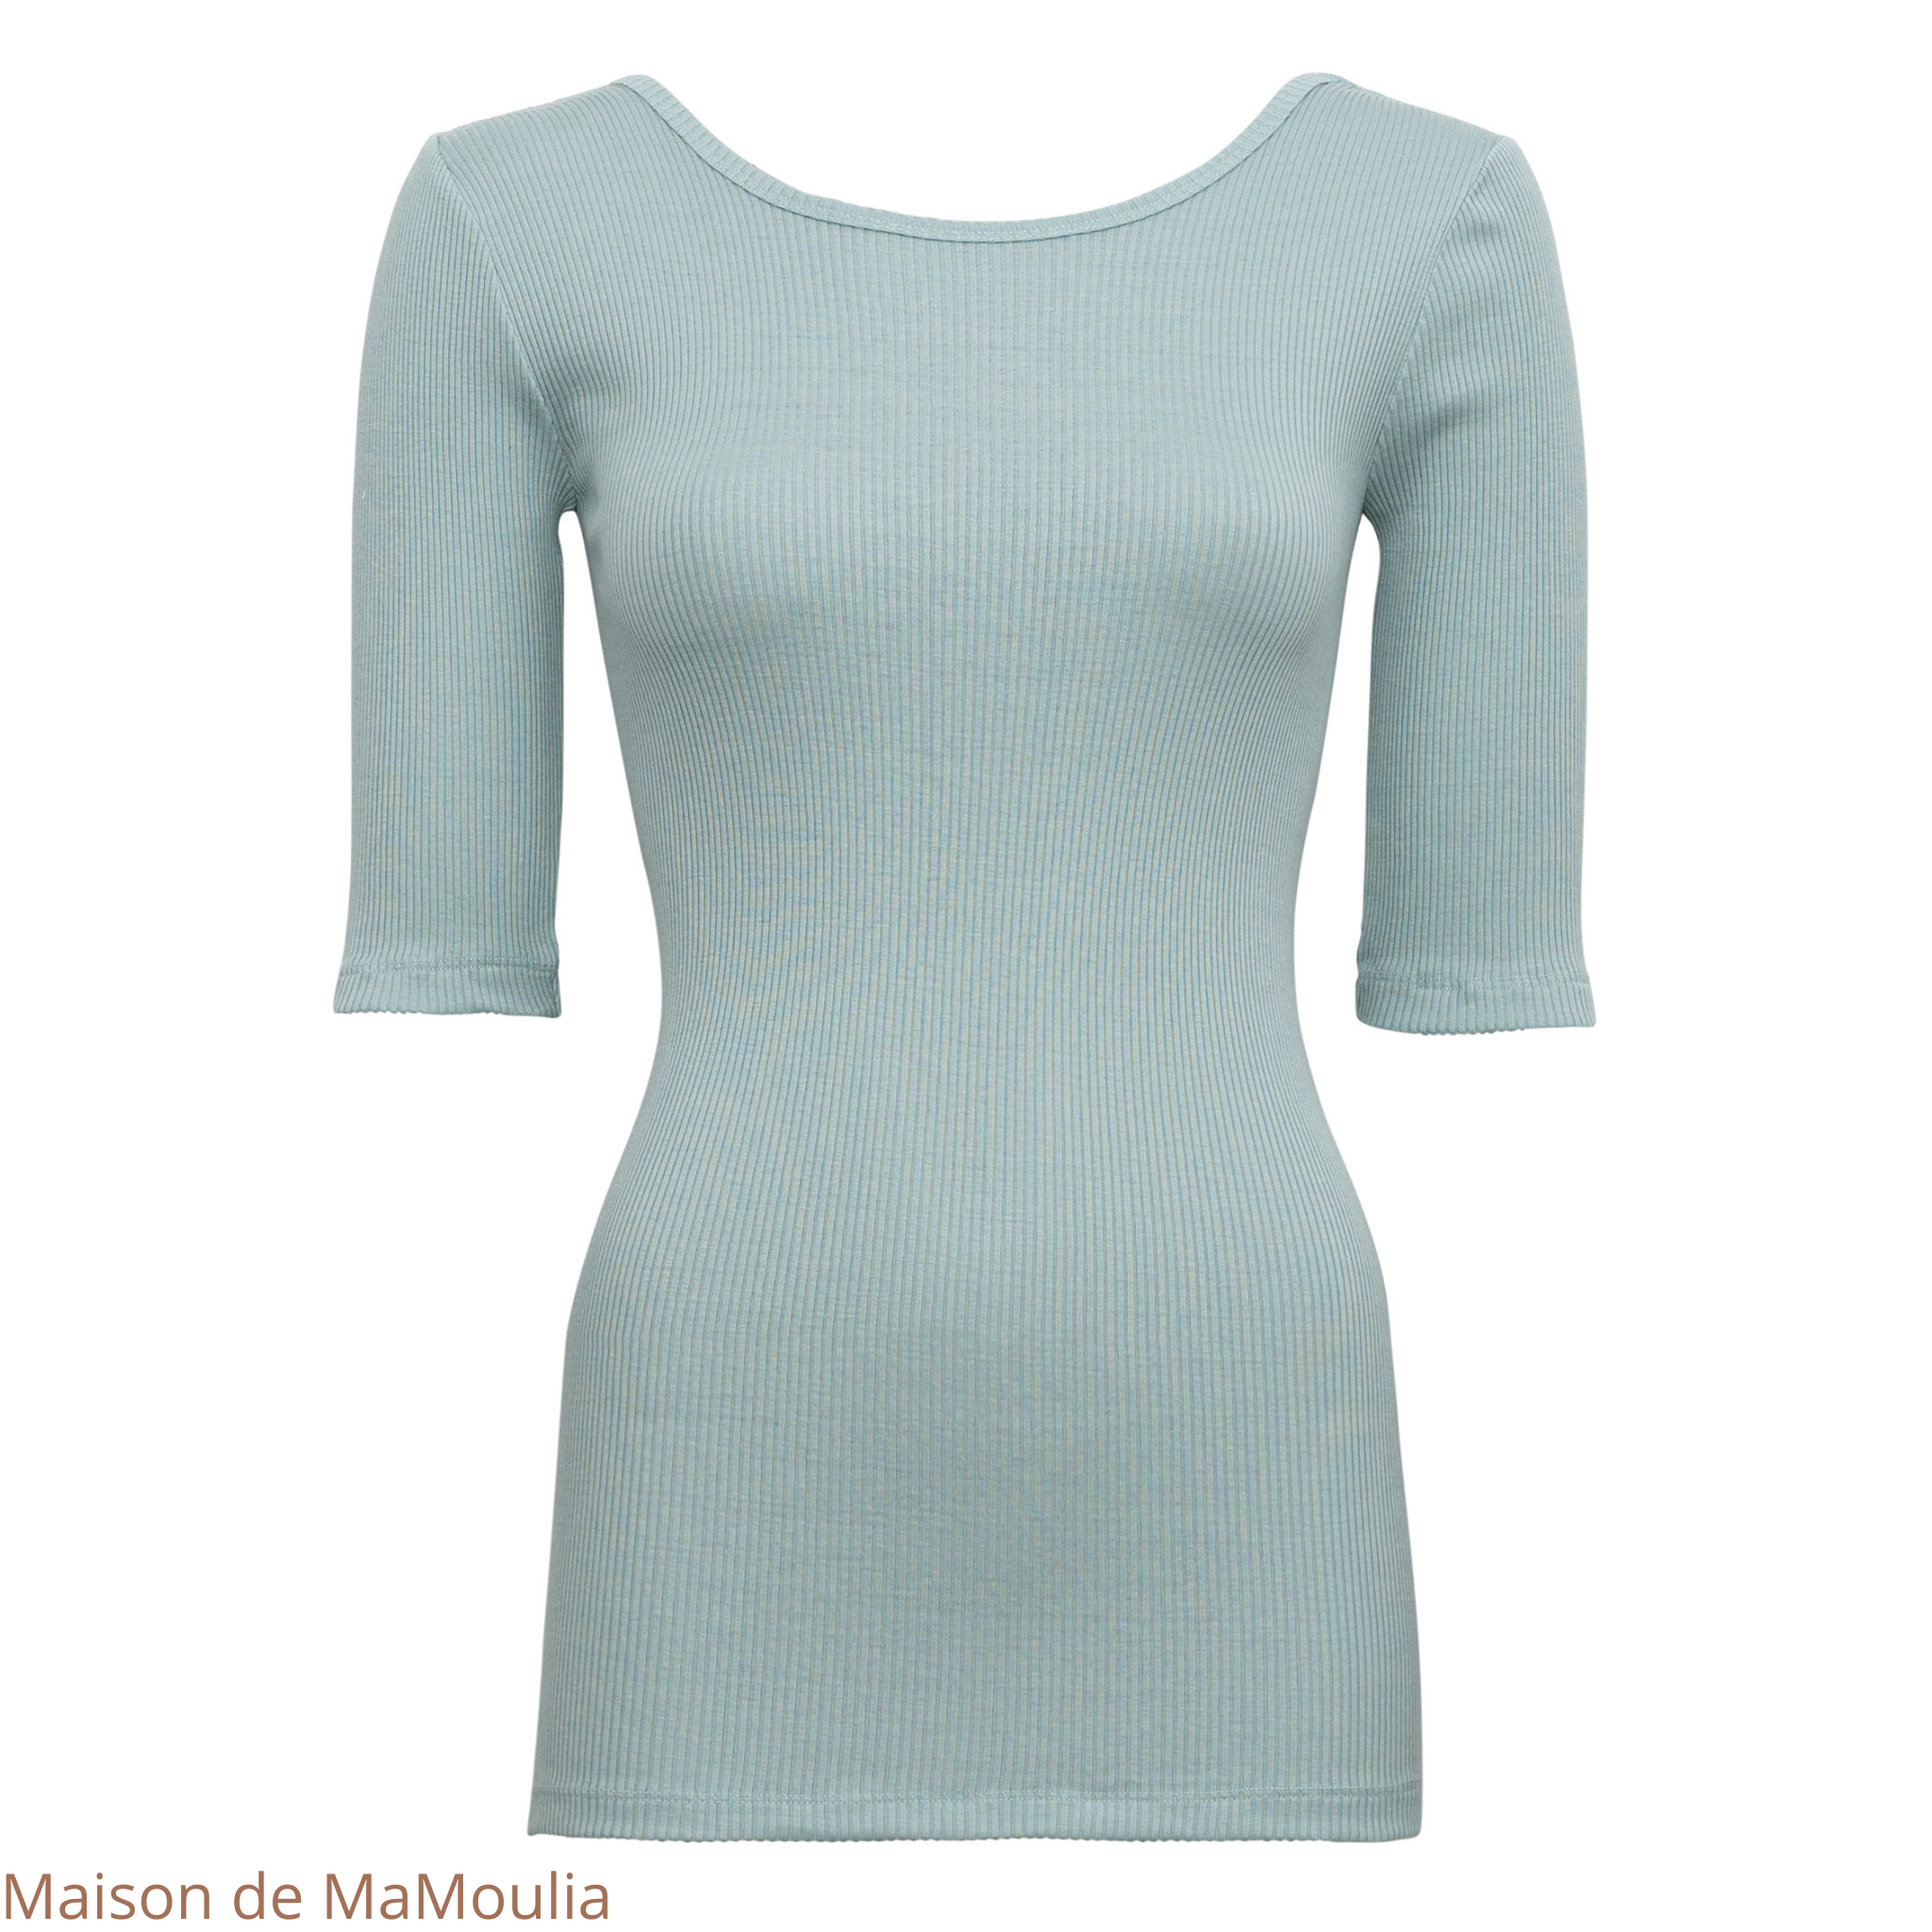 minimalisma-gym- tshirt-top-manches-courtes-34-soie-coton-femme-maison-de-mamoulia- Waterfall-bleu- clair